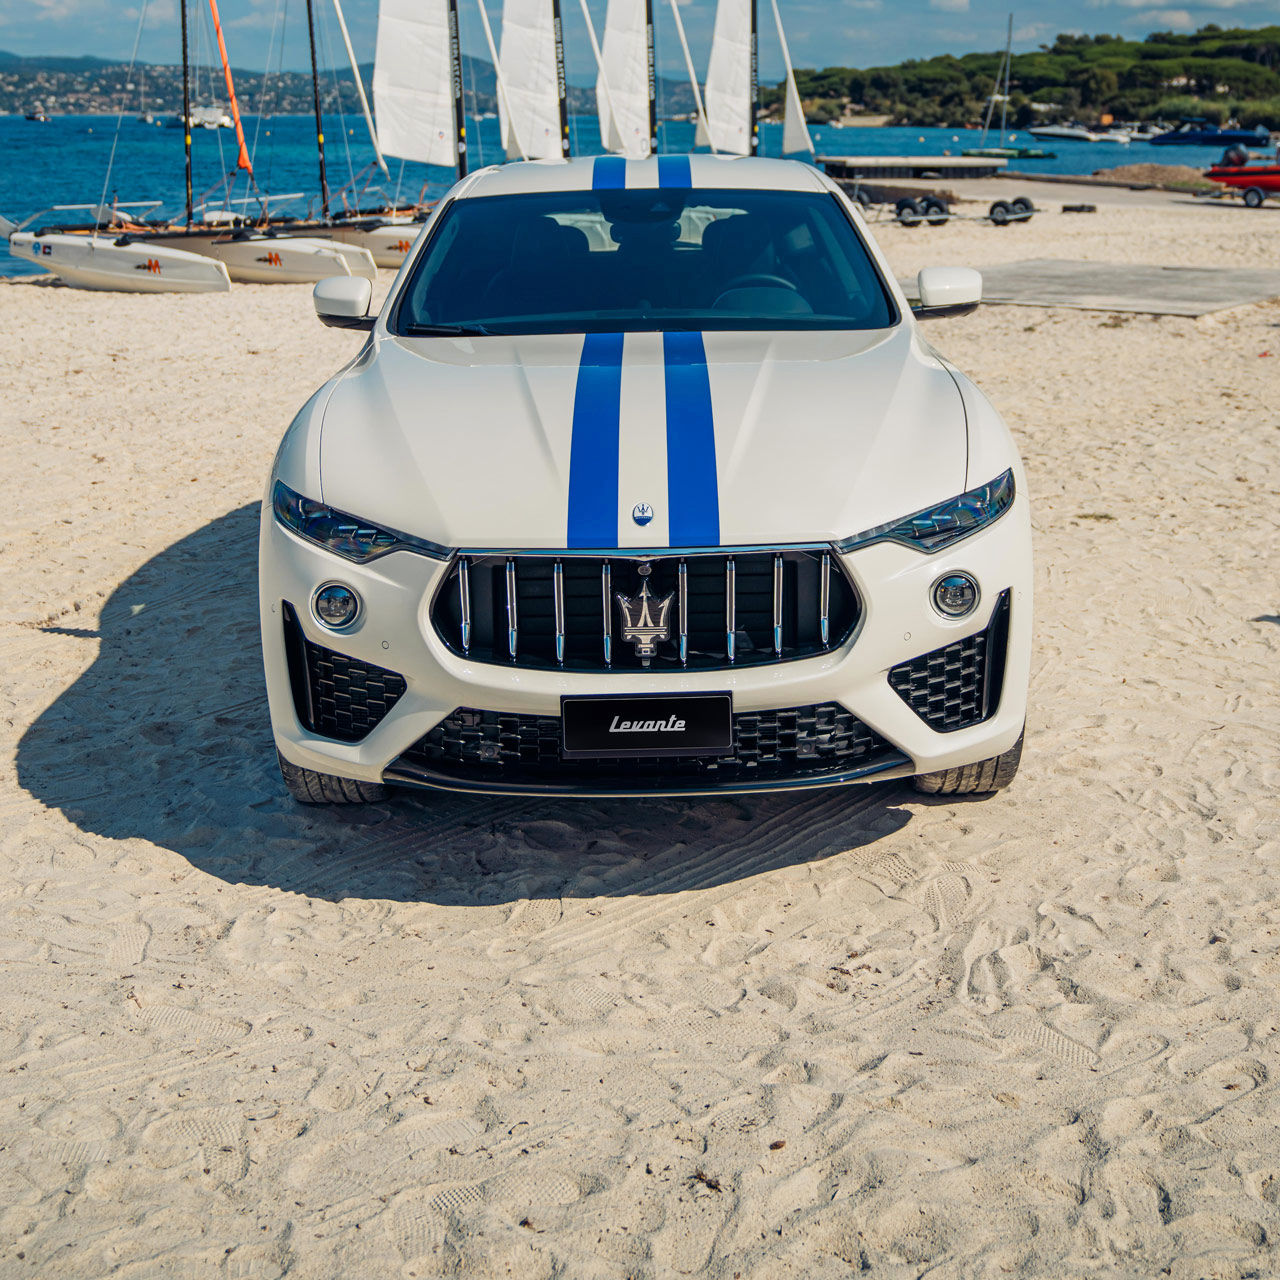 Frontal view of Maserati Levante Hybrid on Saint Tropez beach